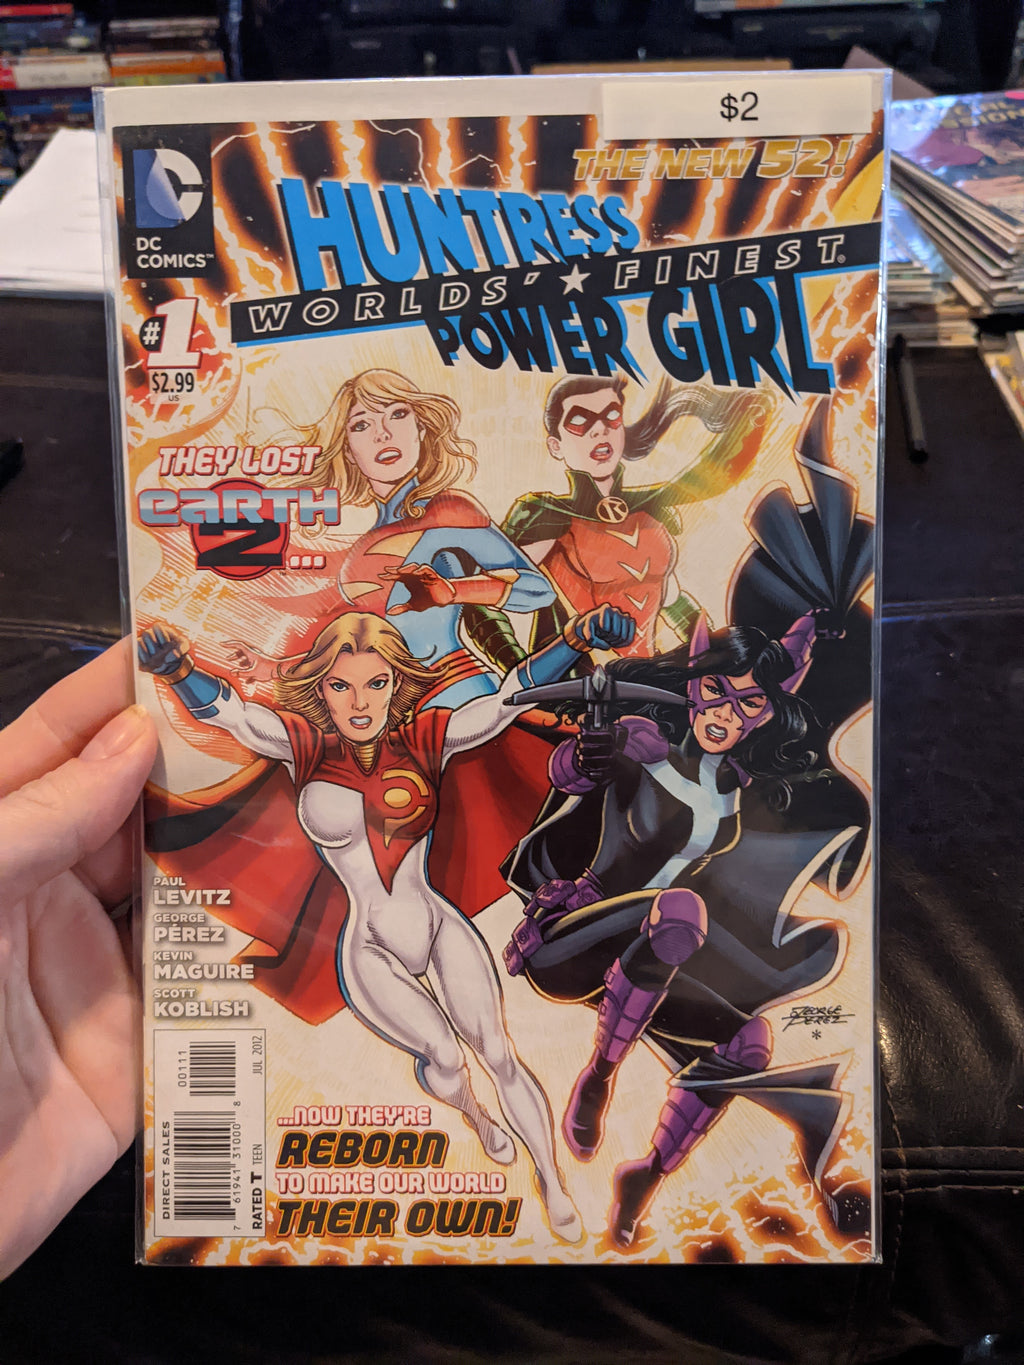 Worlds' Finest vol 3 #1 Huntress & Powergirl of Earth 2 DC Comics NEW 52 (2012)